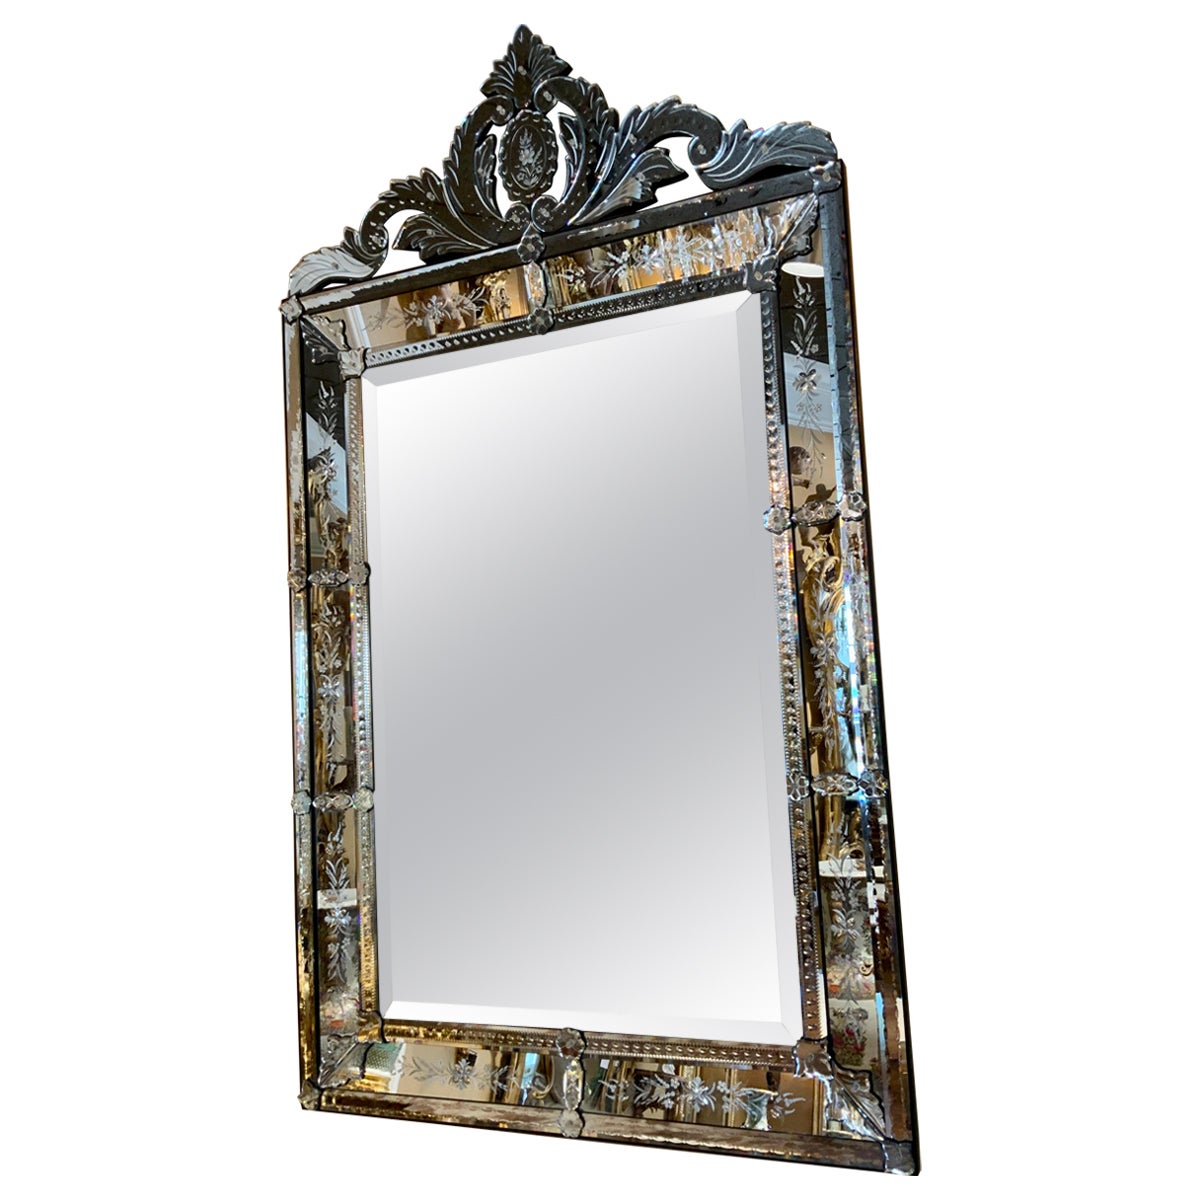 Monumental Venetian glass mirror